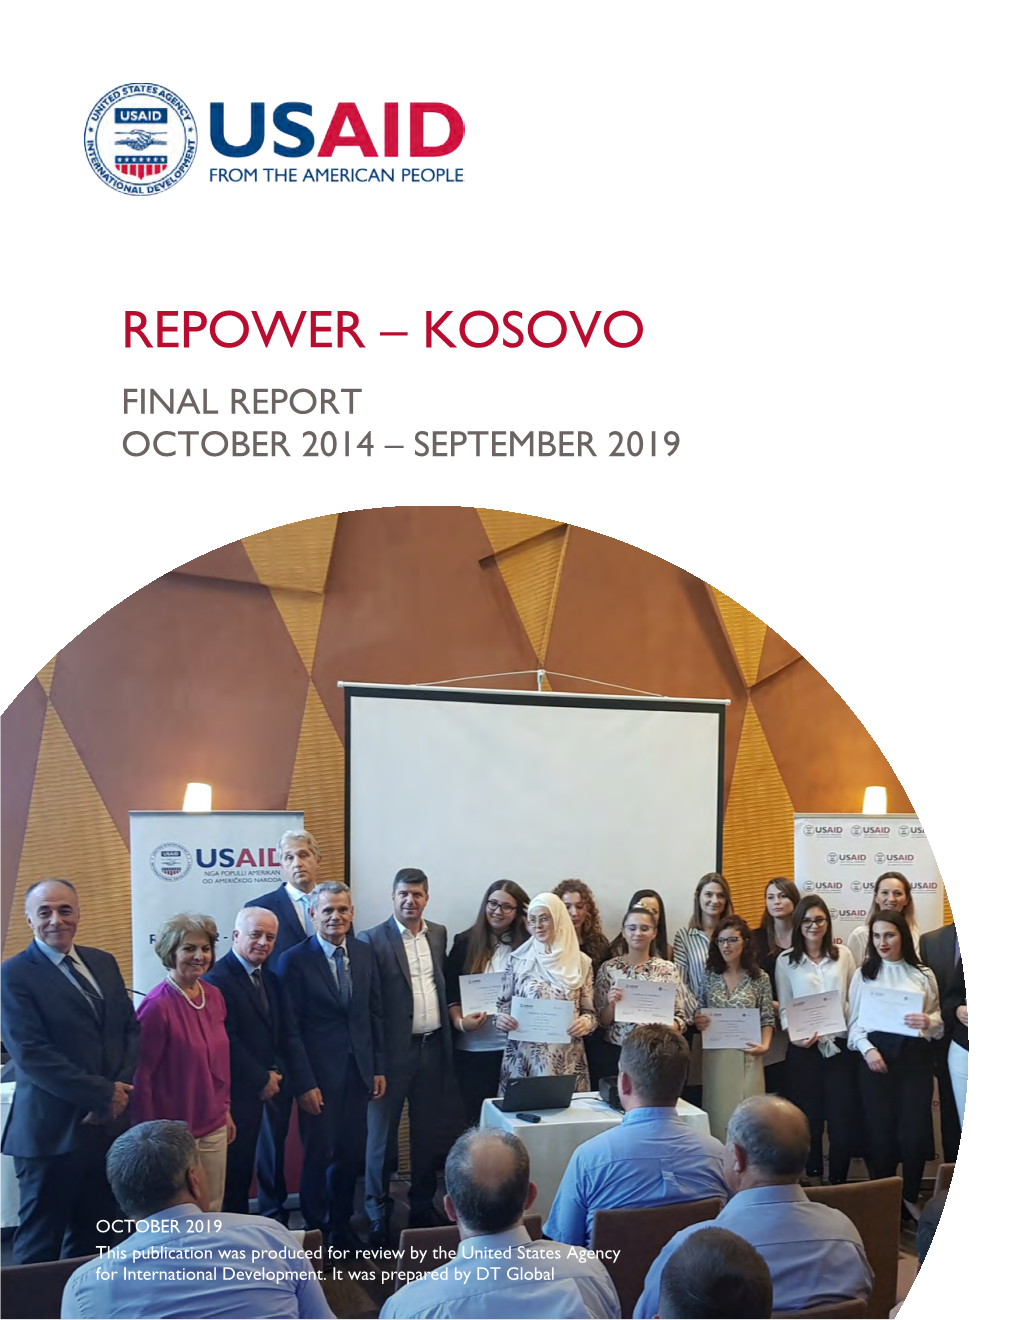 Repower – Kosovo Final Report October 2014 – September 2019